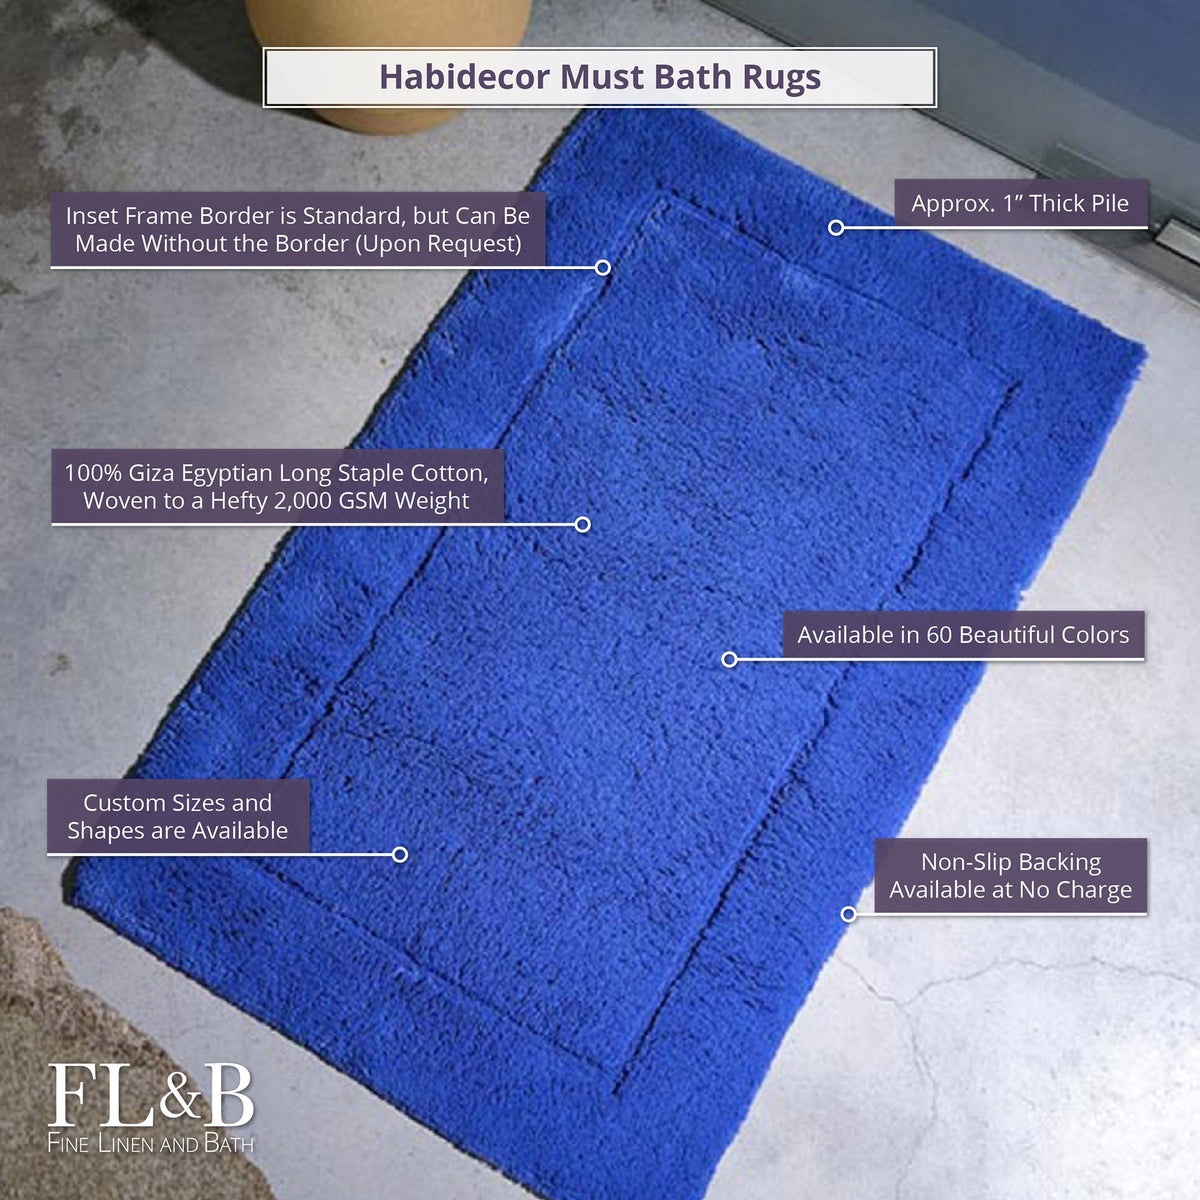 Abyss Habidecor Must Bath Rug Blue with Descriptive Labels